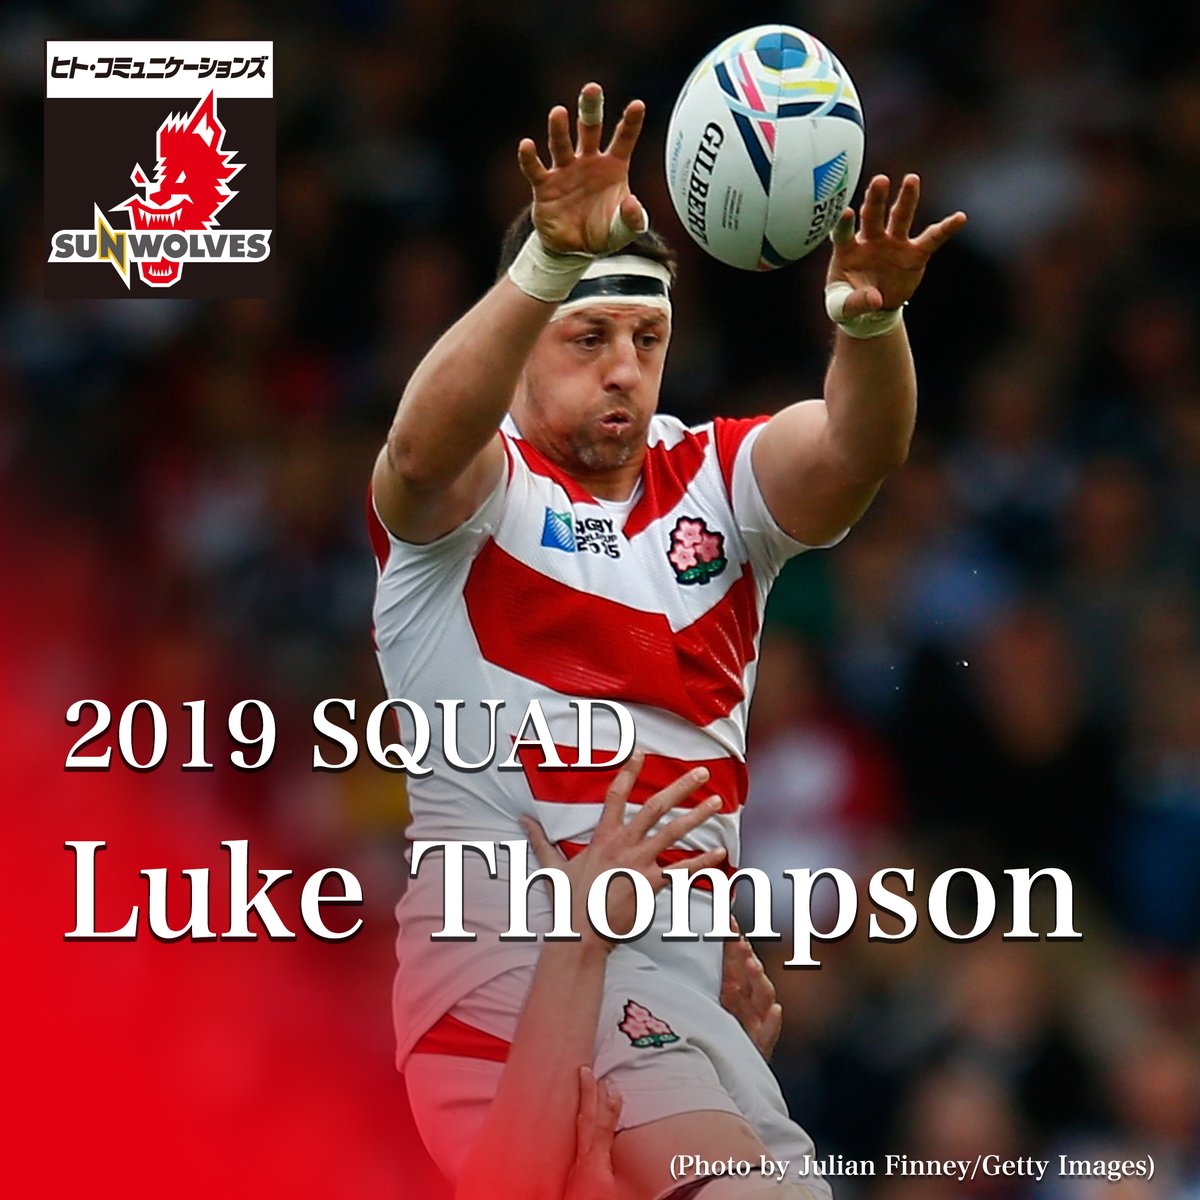 2019 SQUAD NEWS<br>
Sunwolves 2019squad: Luke Thompson